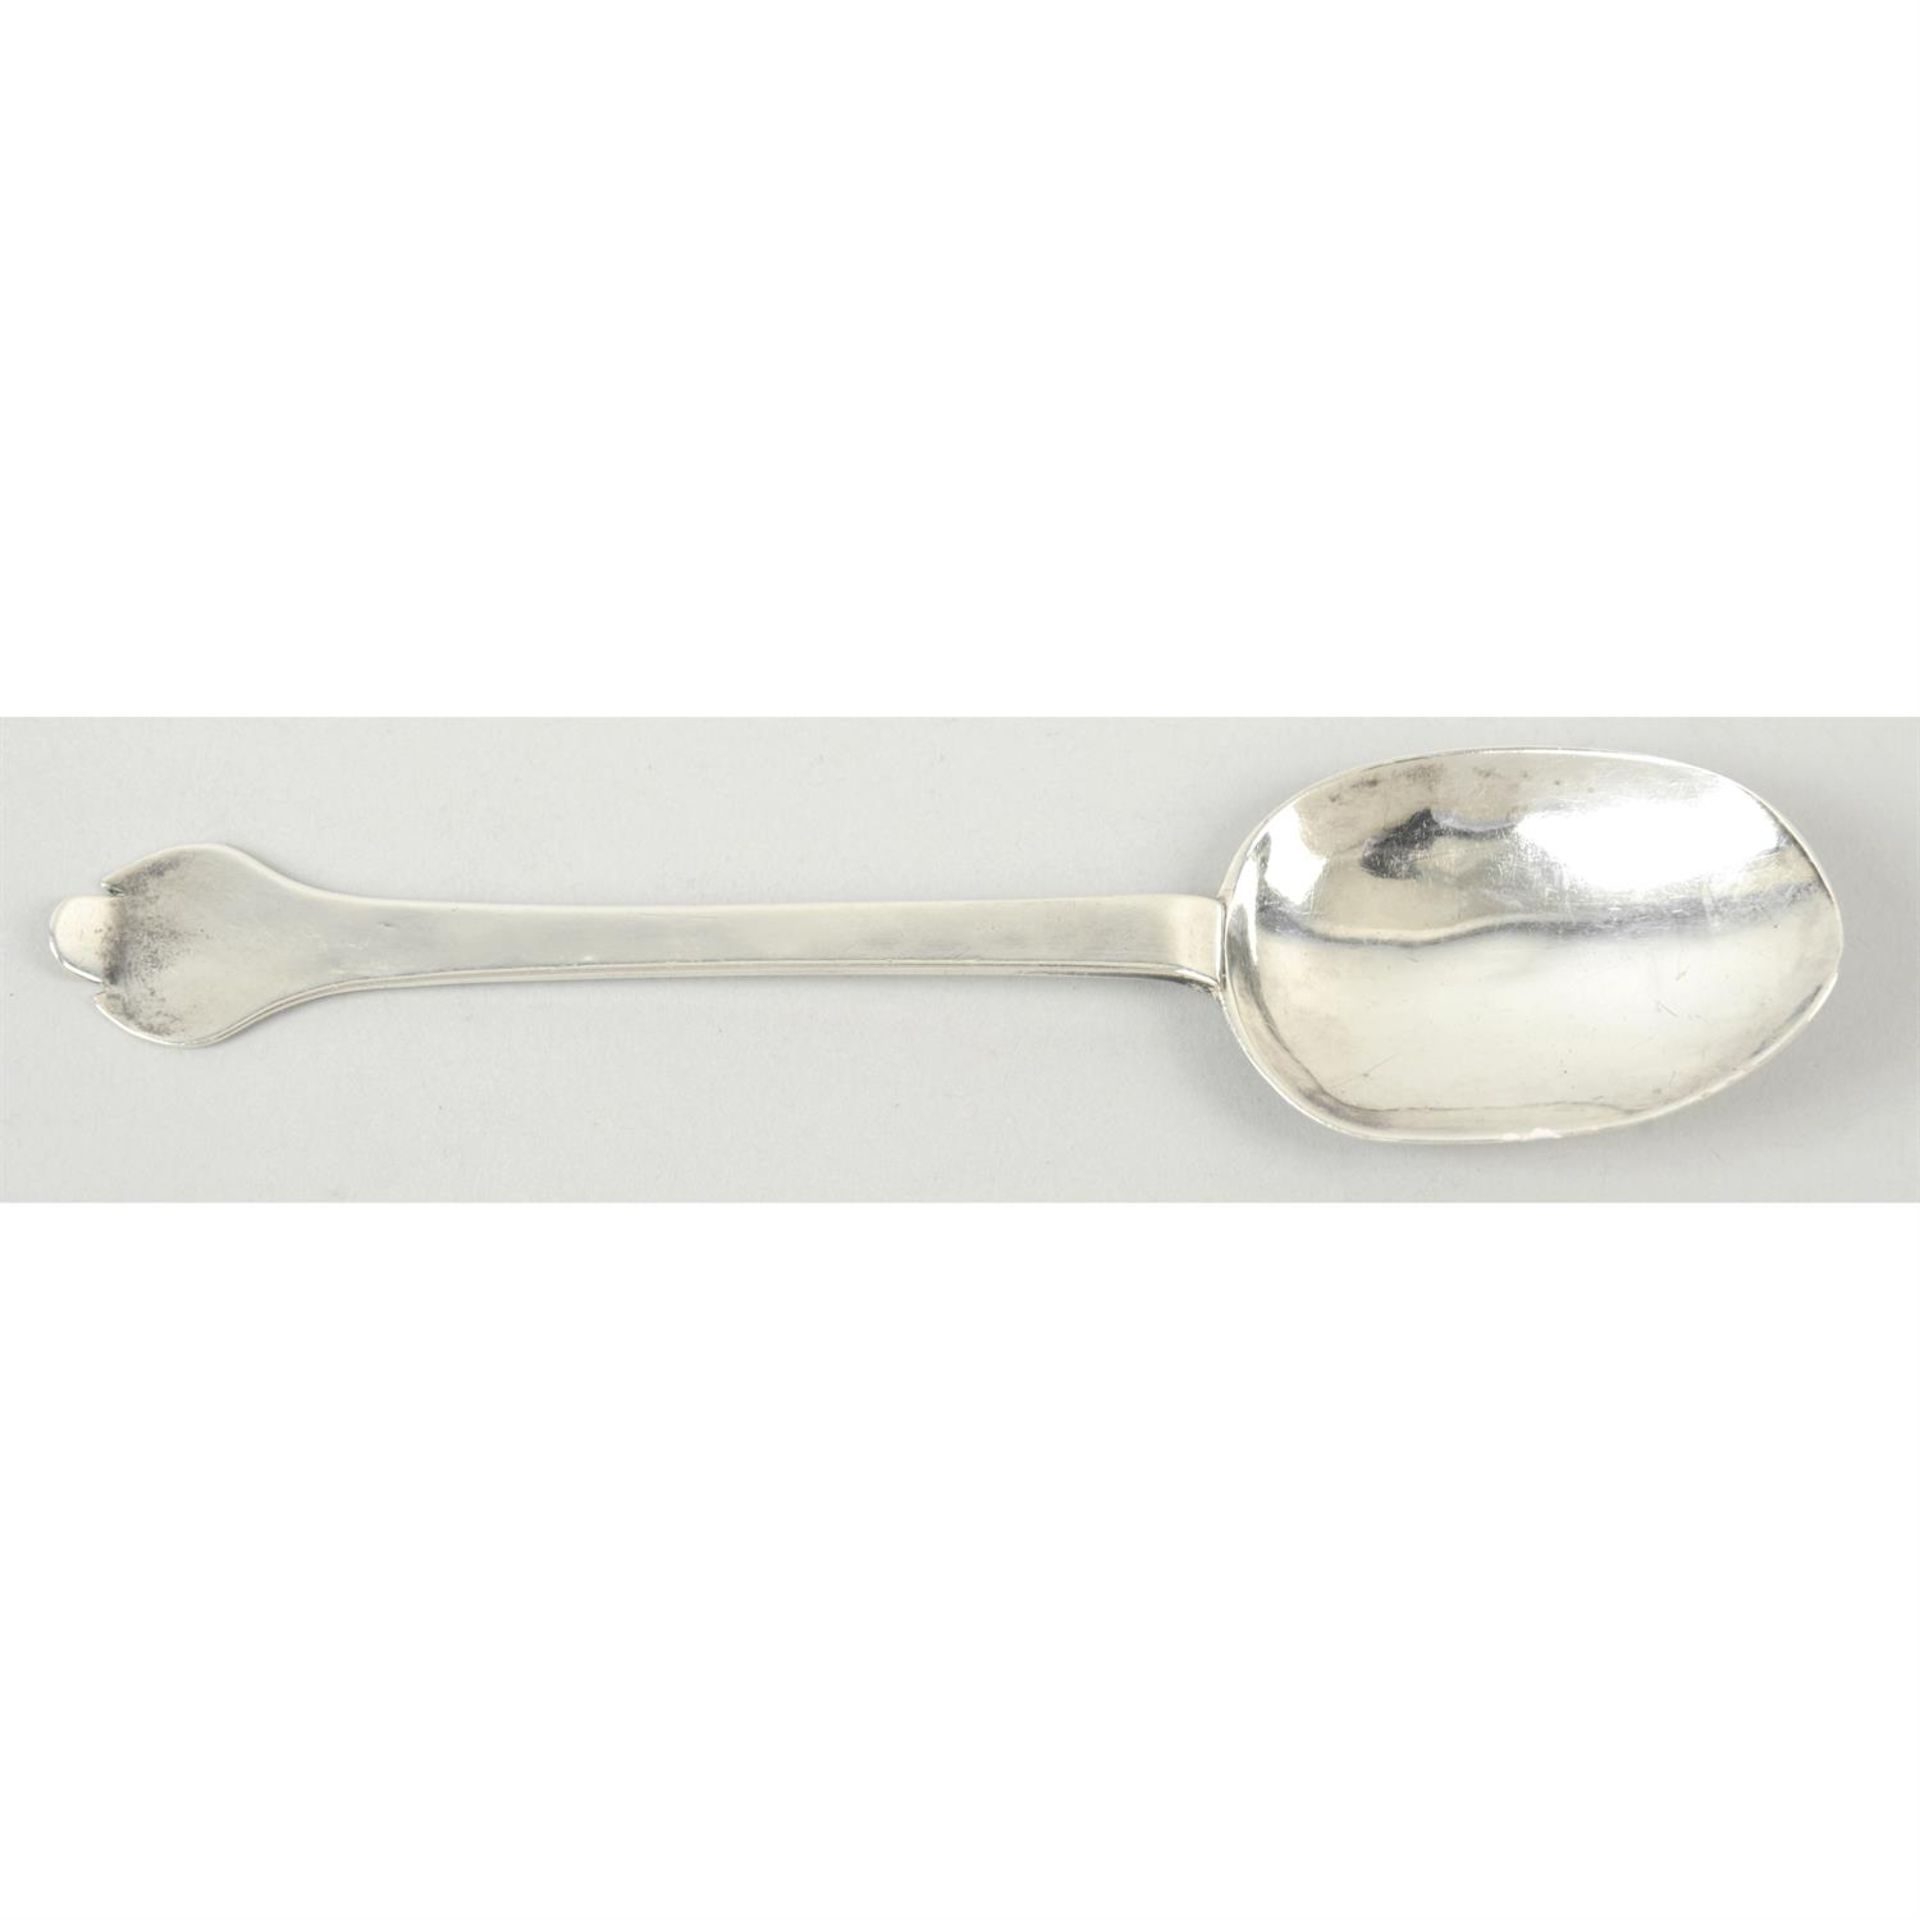 A late 17th century provincial silver Trefid spoon by Eli Bilton, Newcastle.